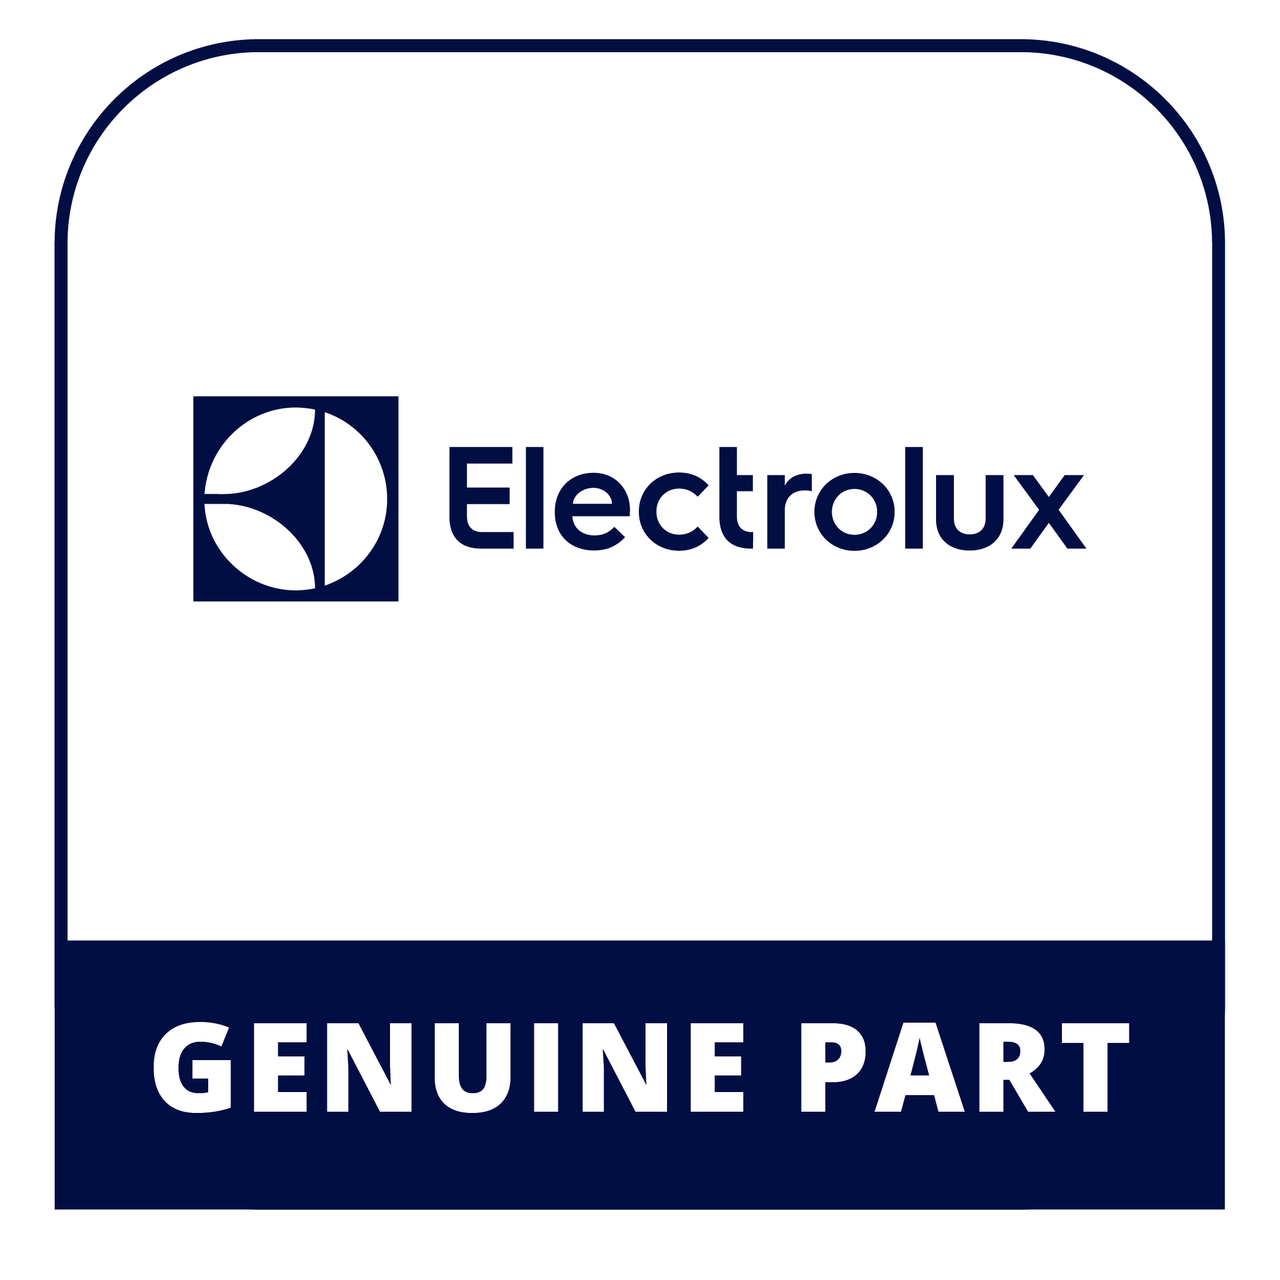 Frigidaire - Electrolux 5304495780 Frame - Genuine Electrolux Part